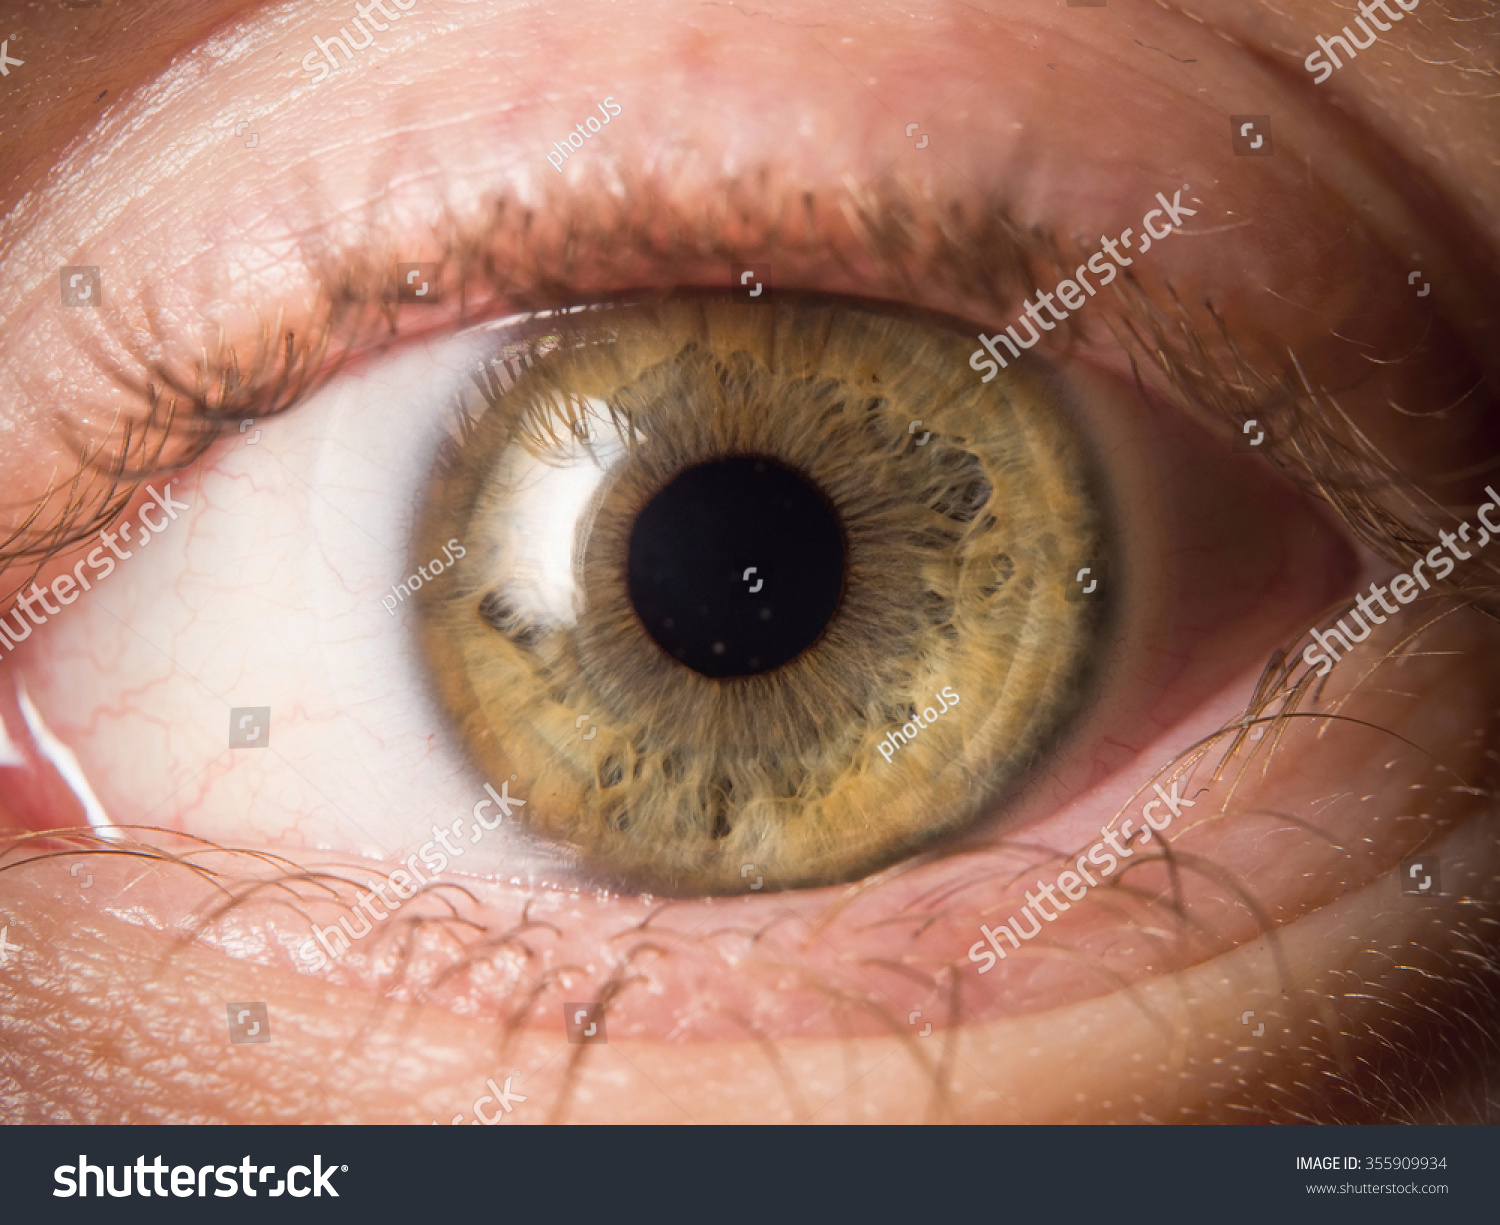 Human eye detail #355909934